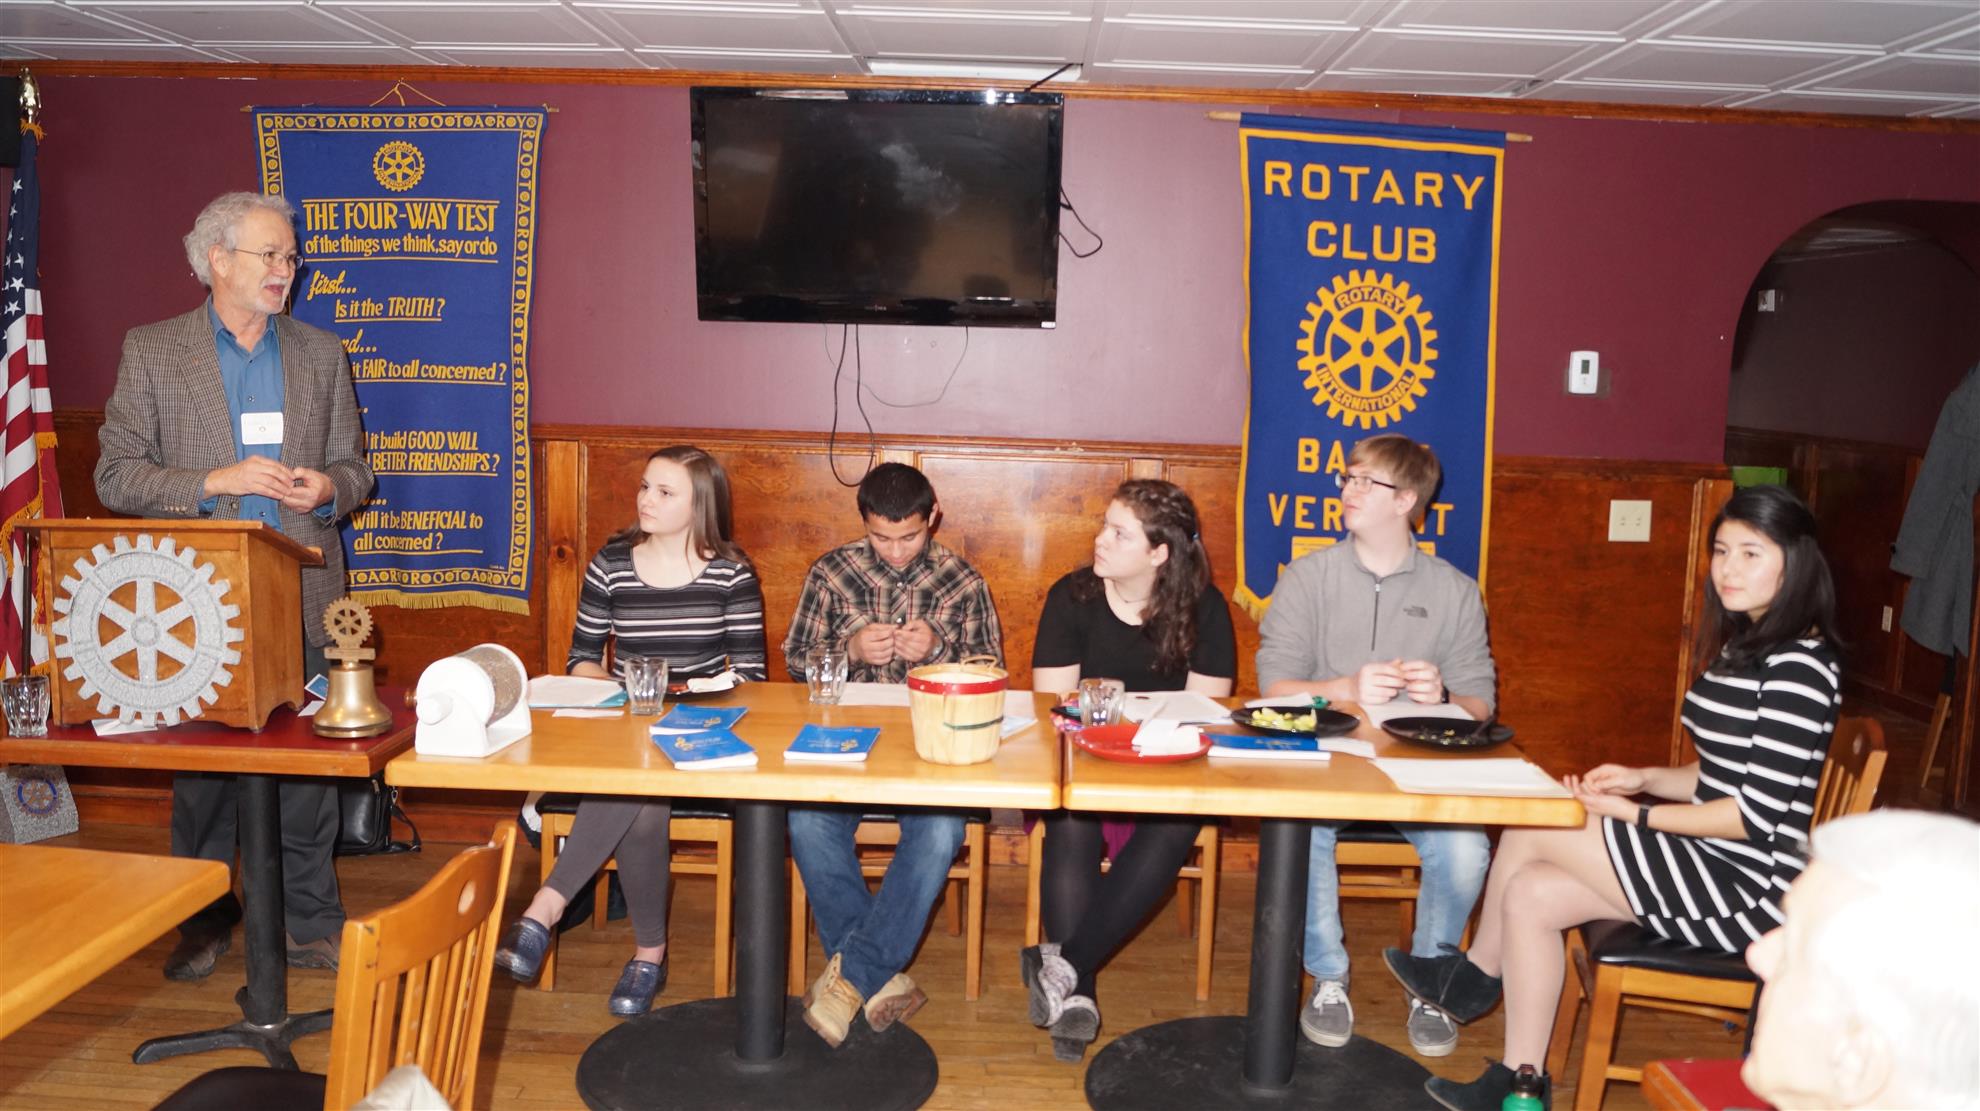 A Speech On The Rotary Club